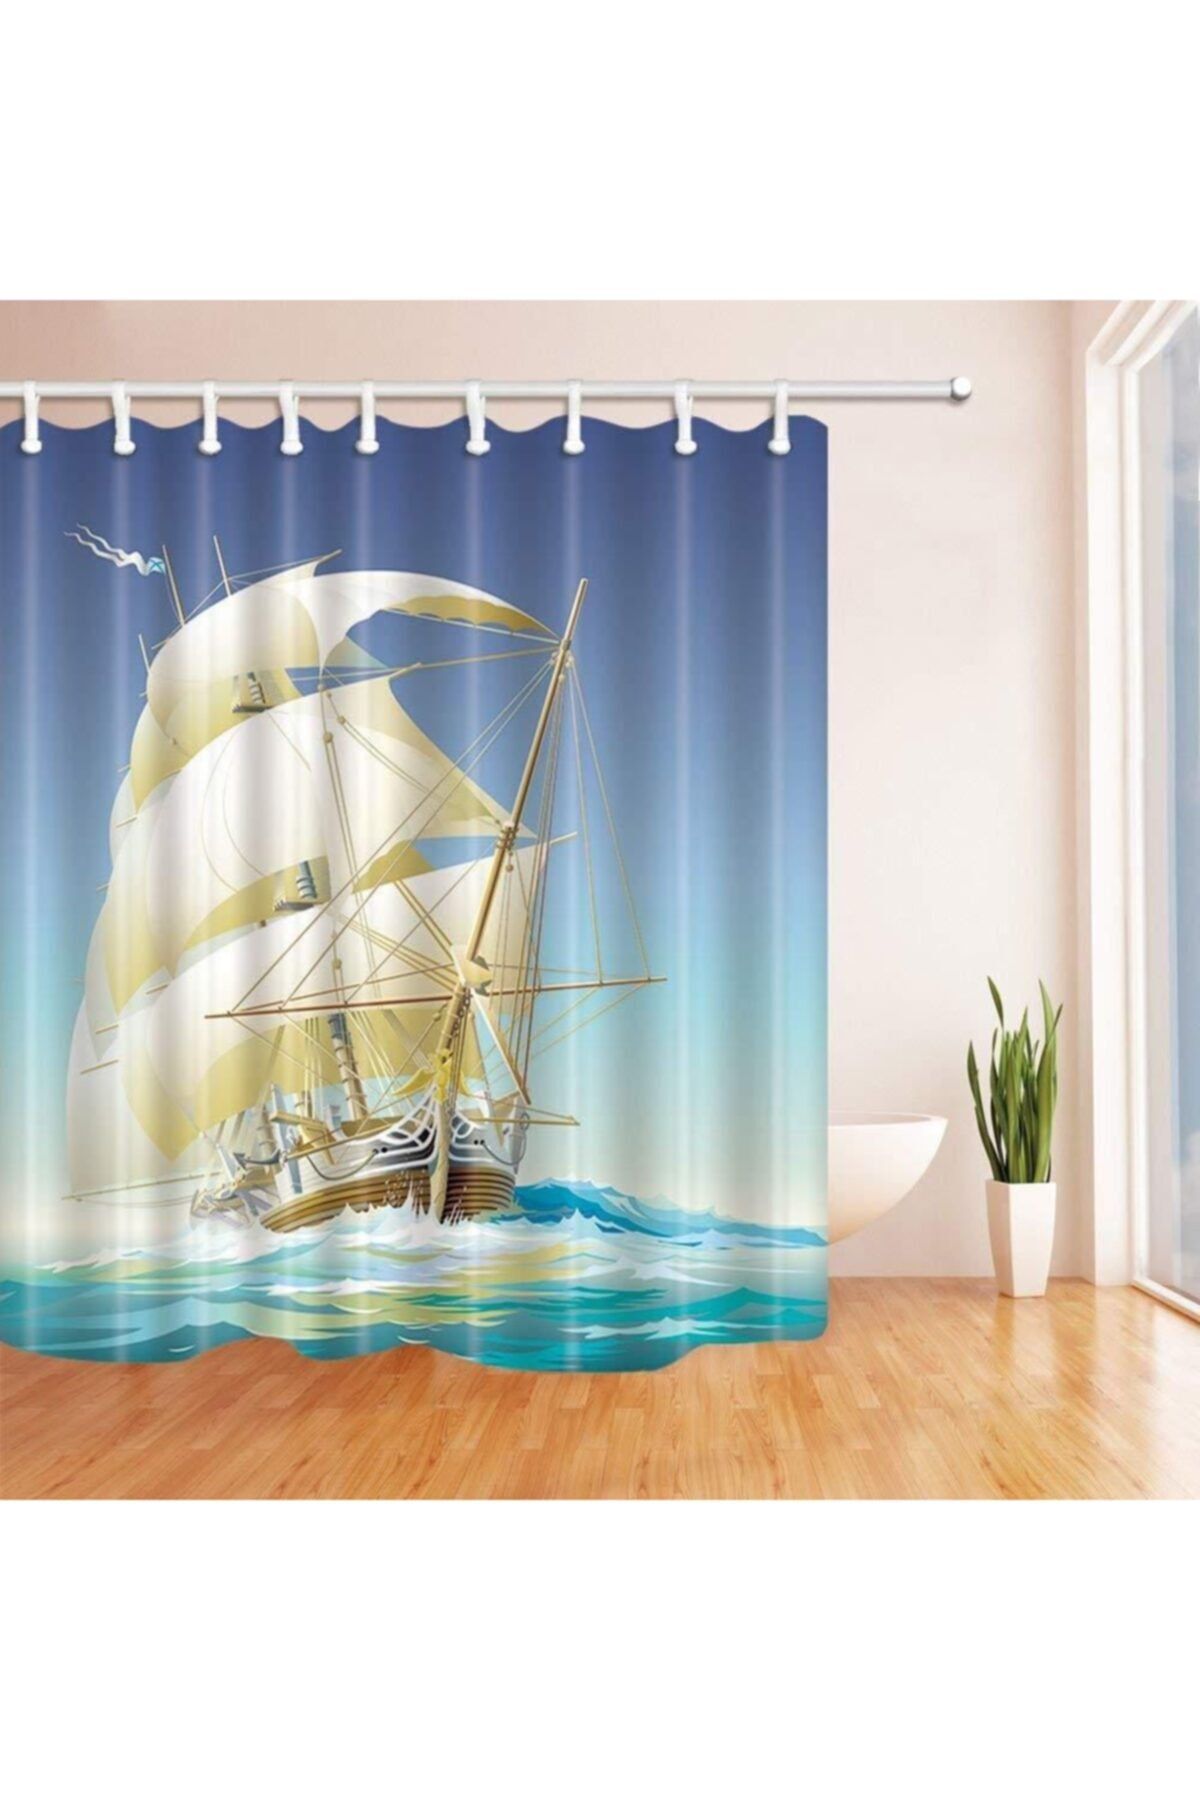 Zethome Tropik Sail Boat Banyo Duş Perdesi Tek Kanat 1x120x200